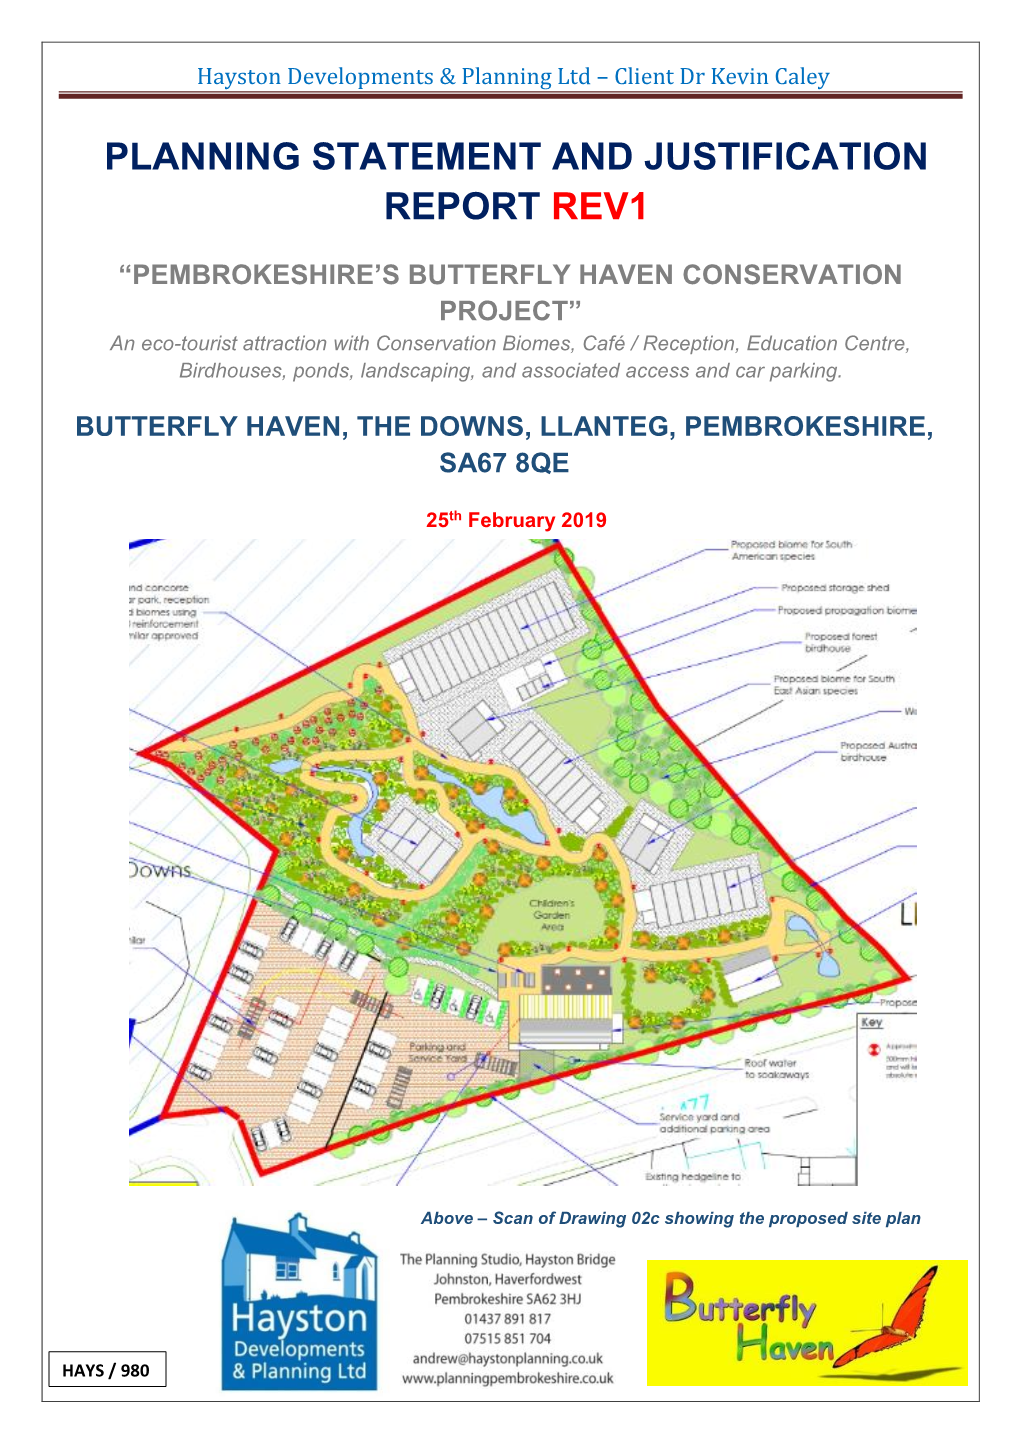 Butterfly Haven, the Downs, Llanteg, Pembrokeshire, Sa67 8Qe